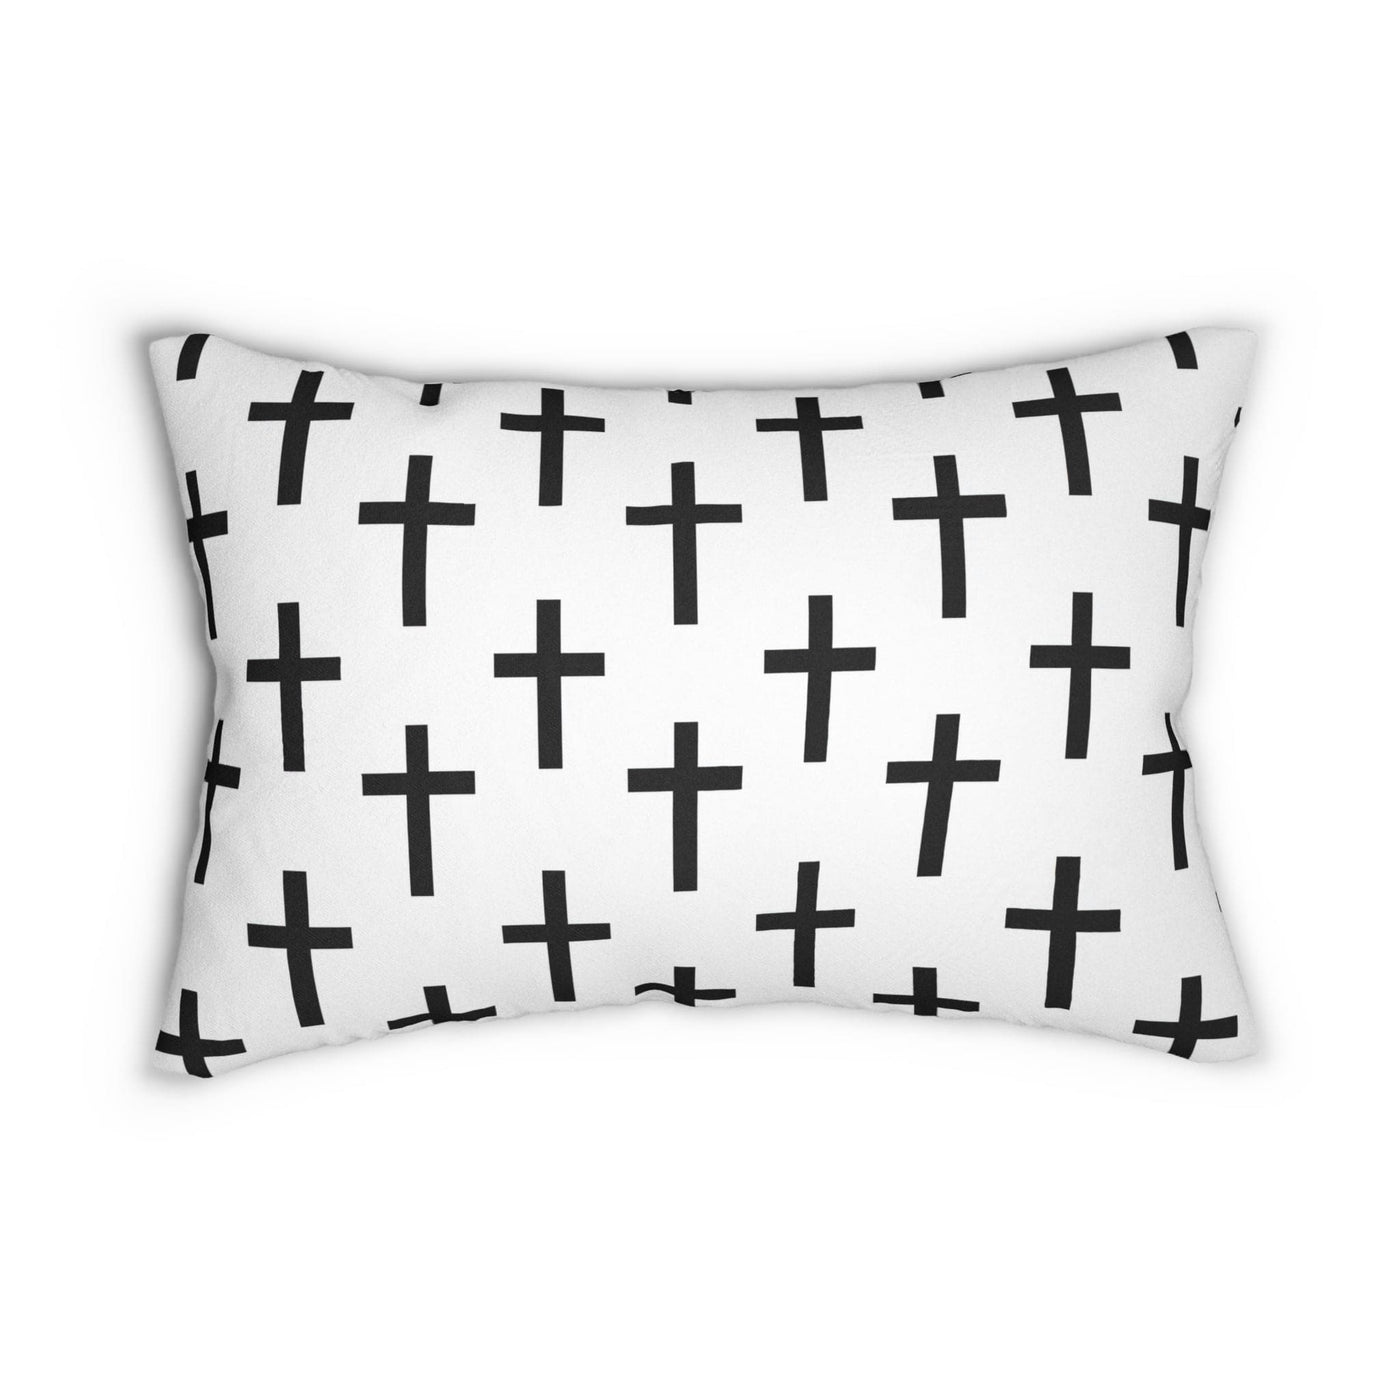 Decorative Lumbar Throw Pillow - White And Black Seamless Cross Pattern - Home